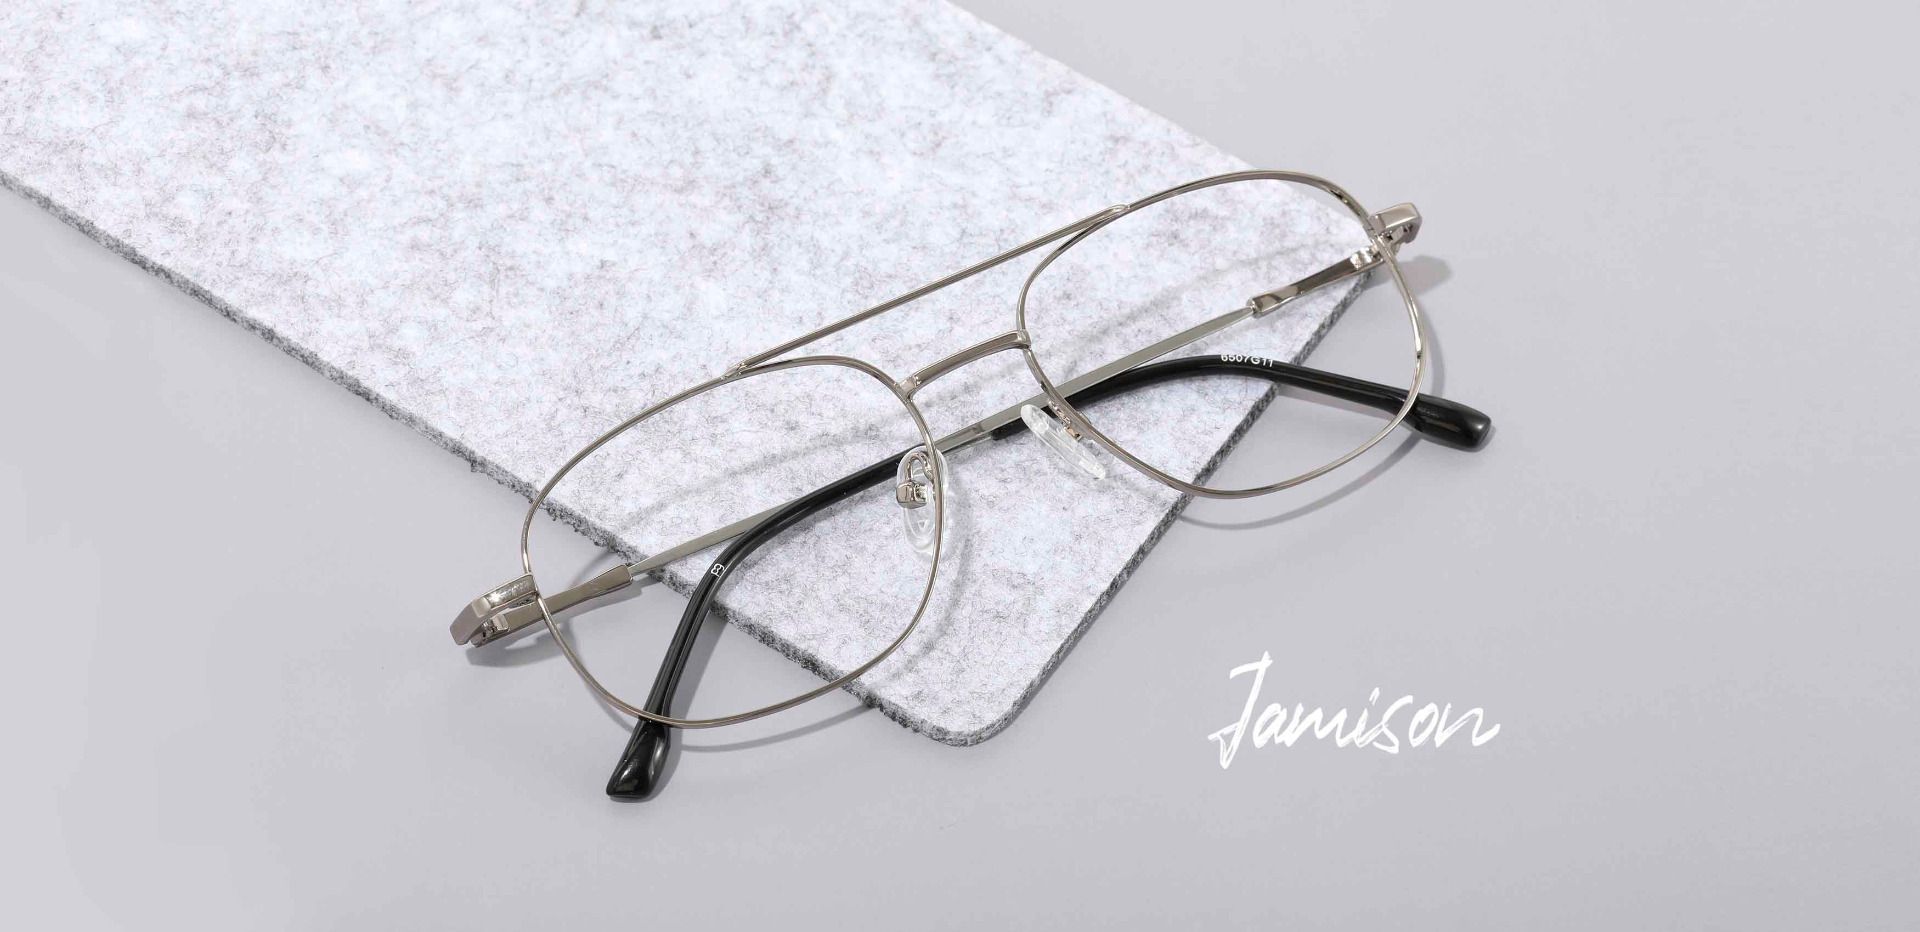 Jamison Aviator Prescription Glasses - Gray